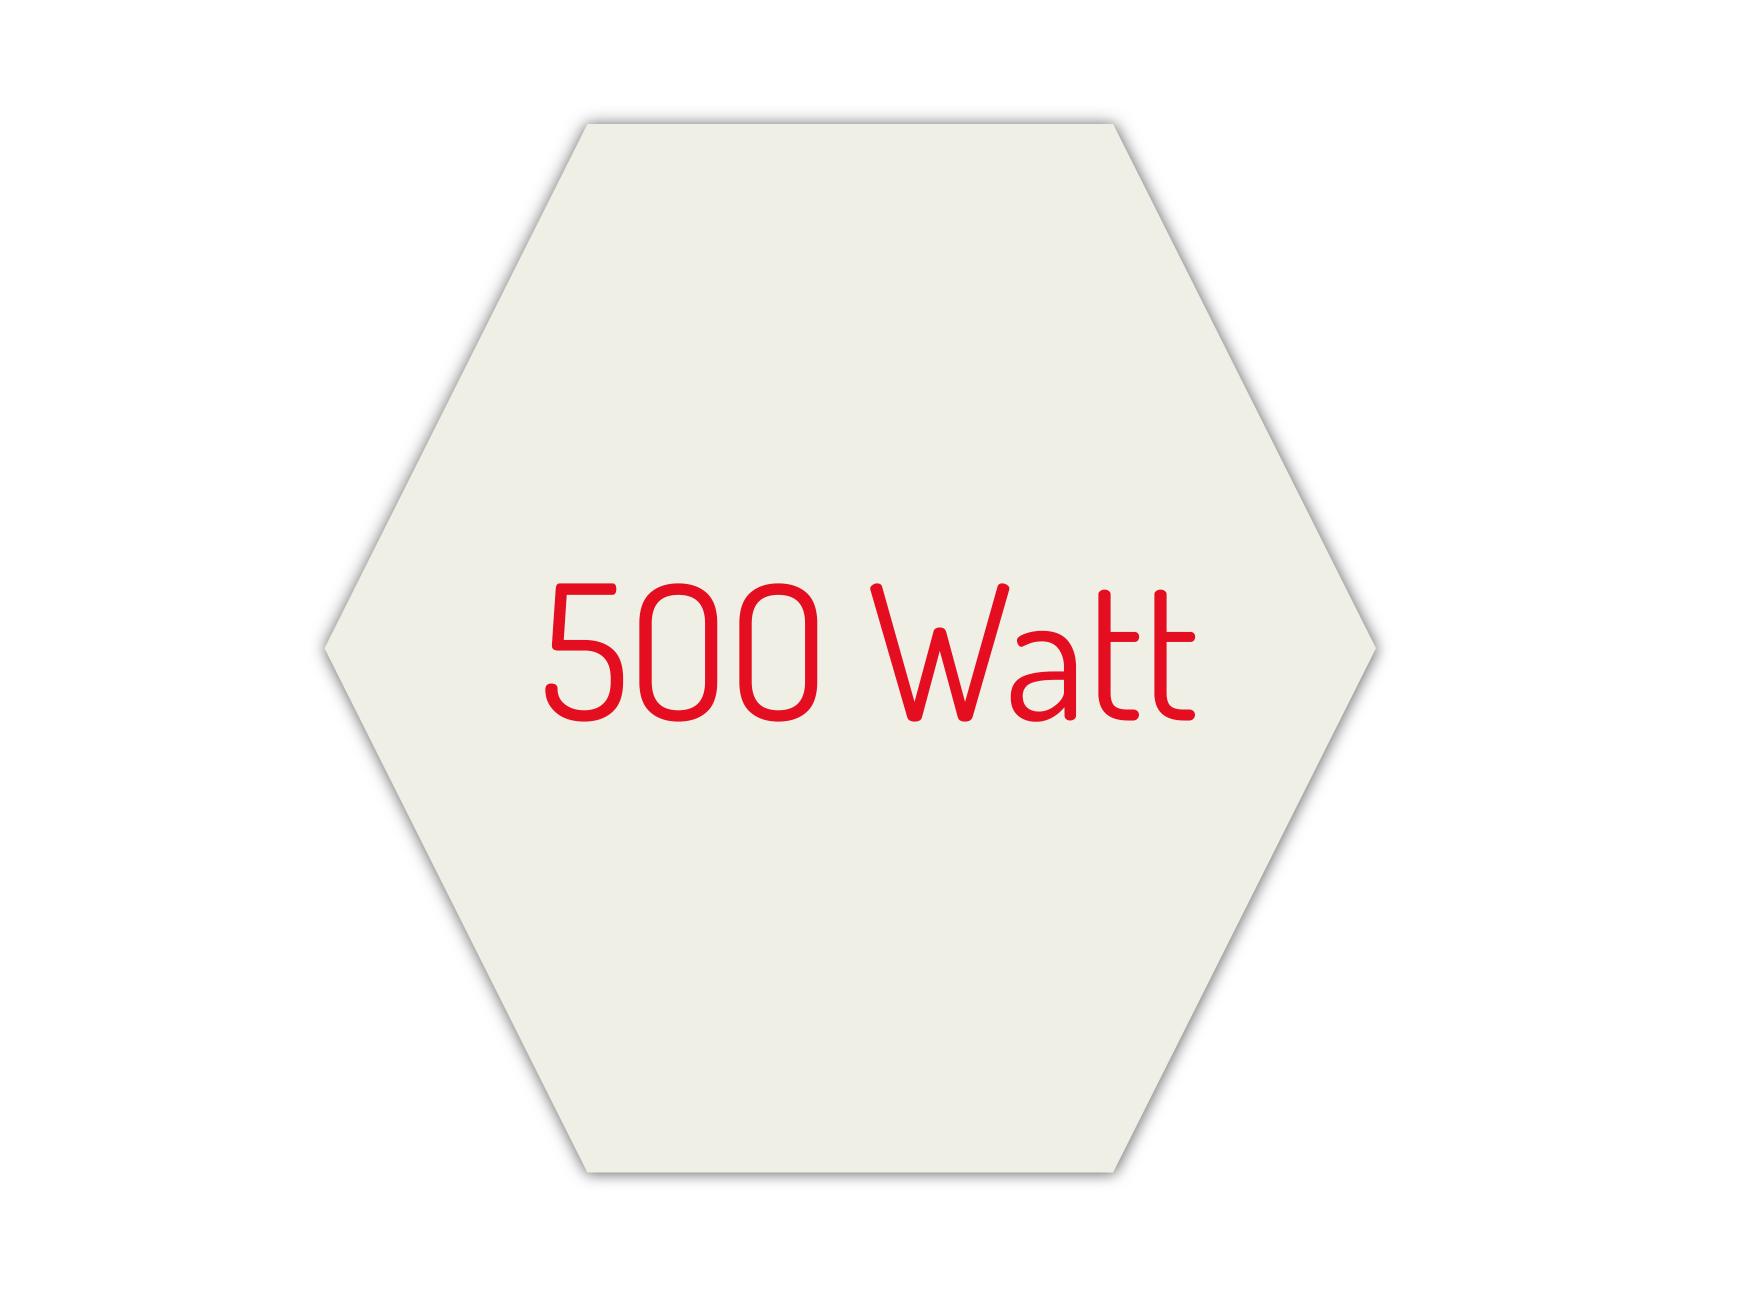 PowerSun Hexagon 500 Watt 86x86cm